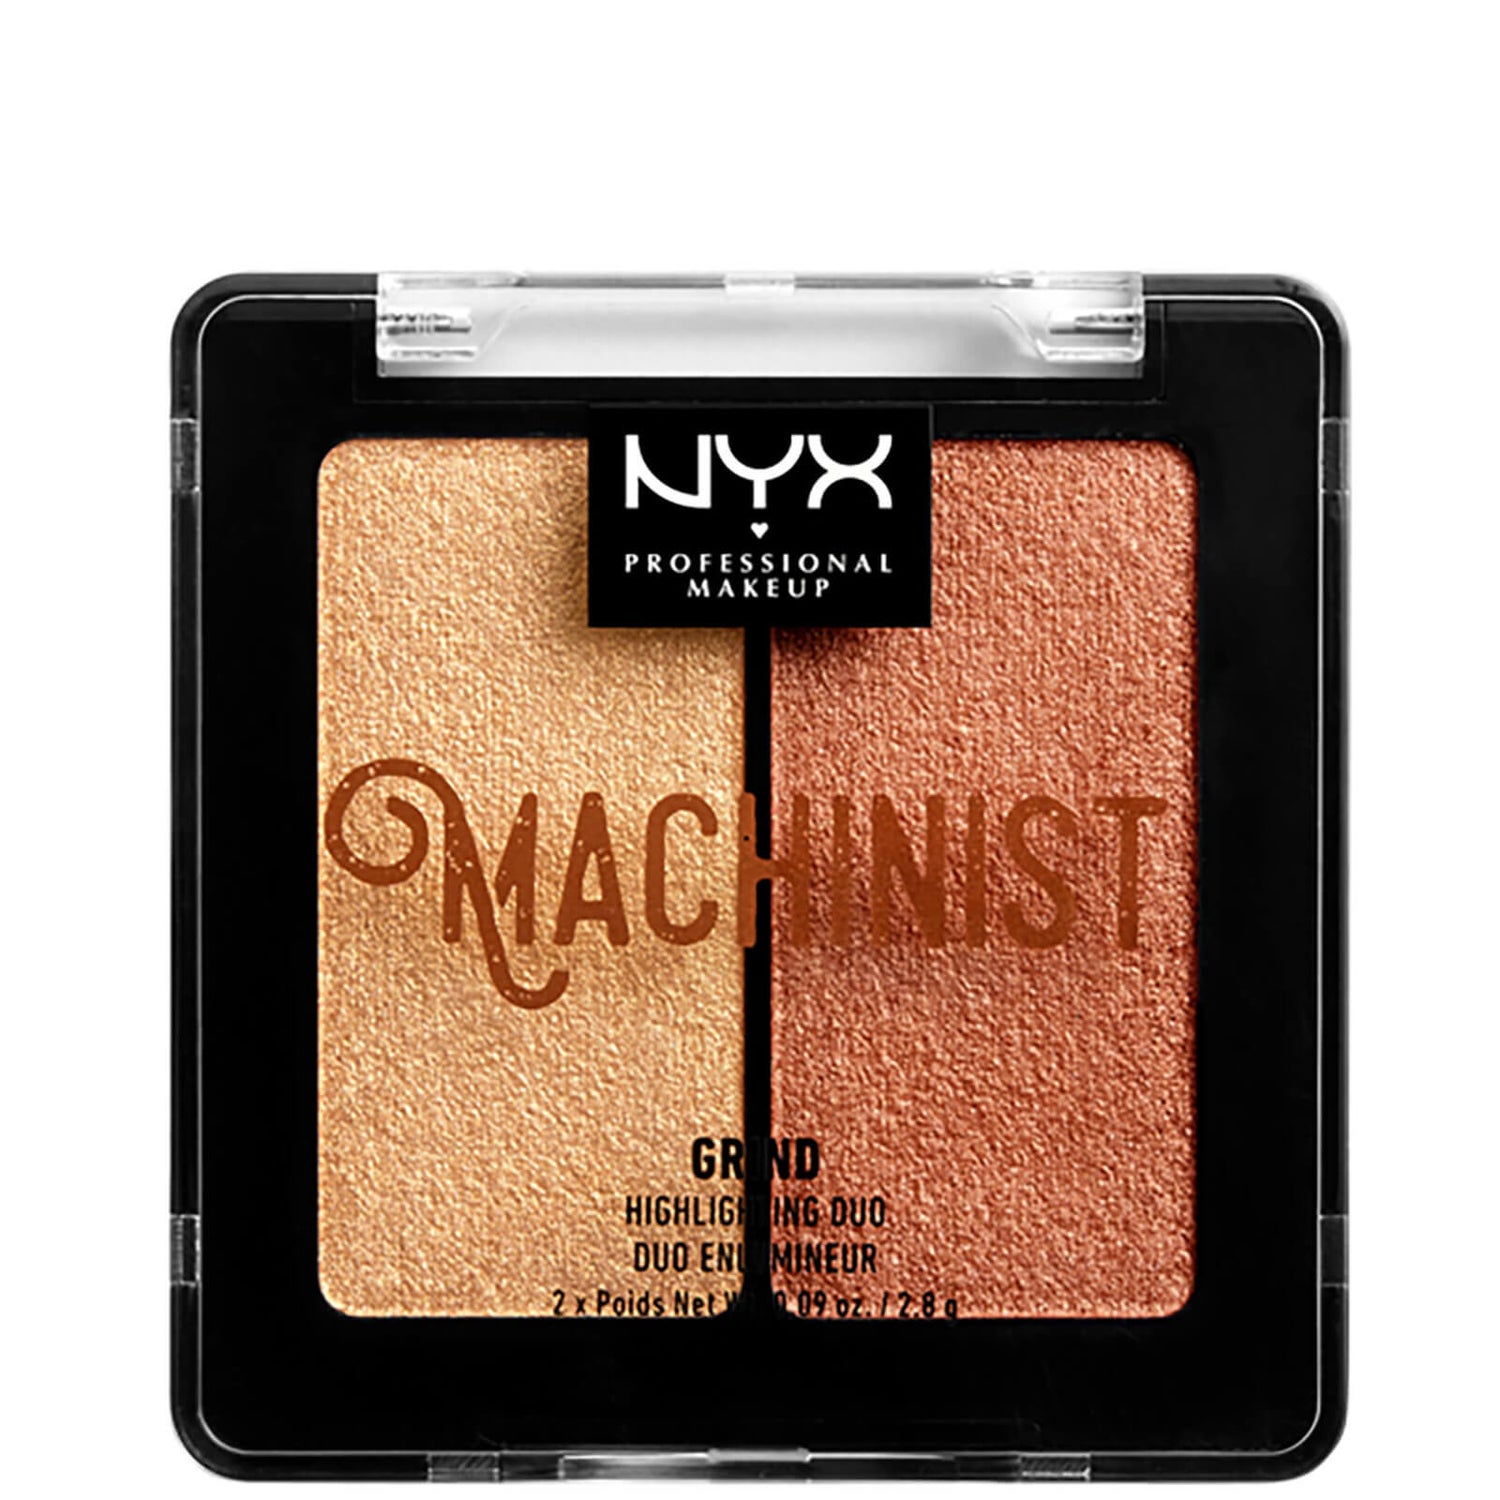 NYX Professional Makeup Machinist Highlighter Duo Kit -korostusväriduo, Grind